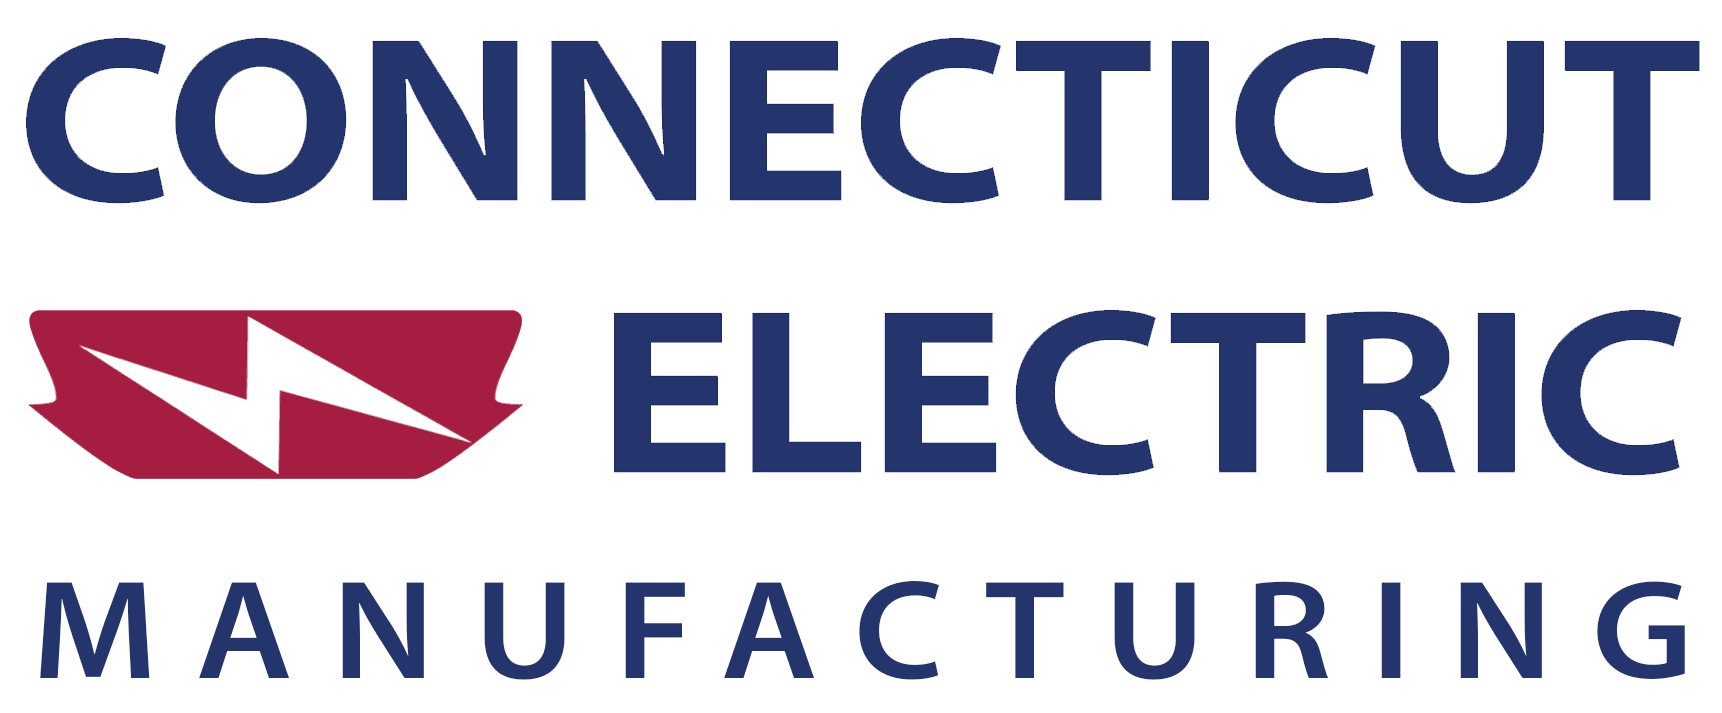 Connecticut Electric, Inc.